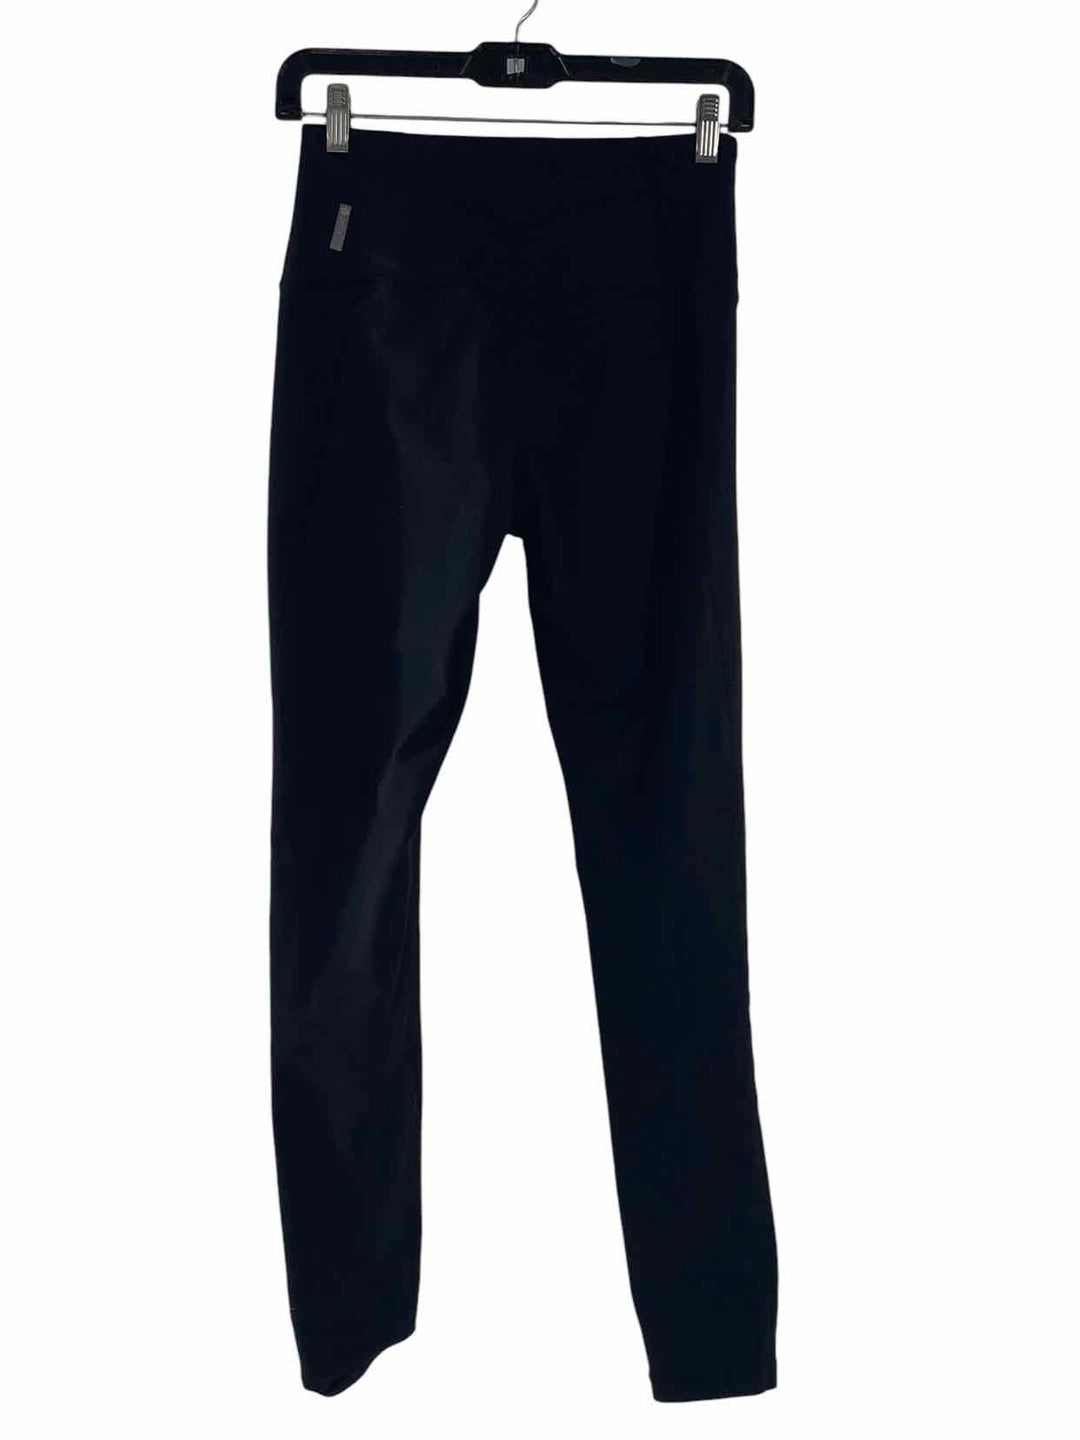 Zella Size S Black Athletic Pants